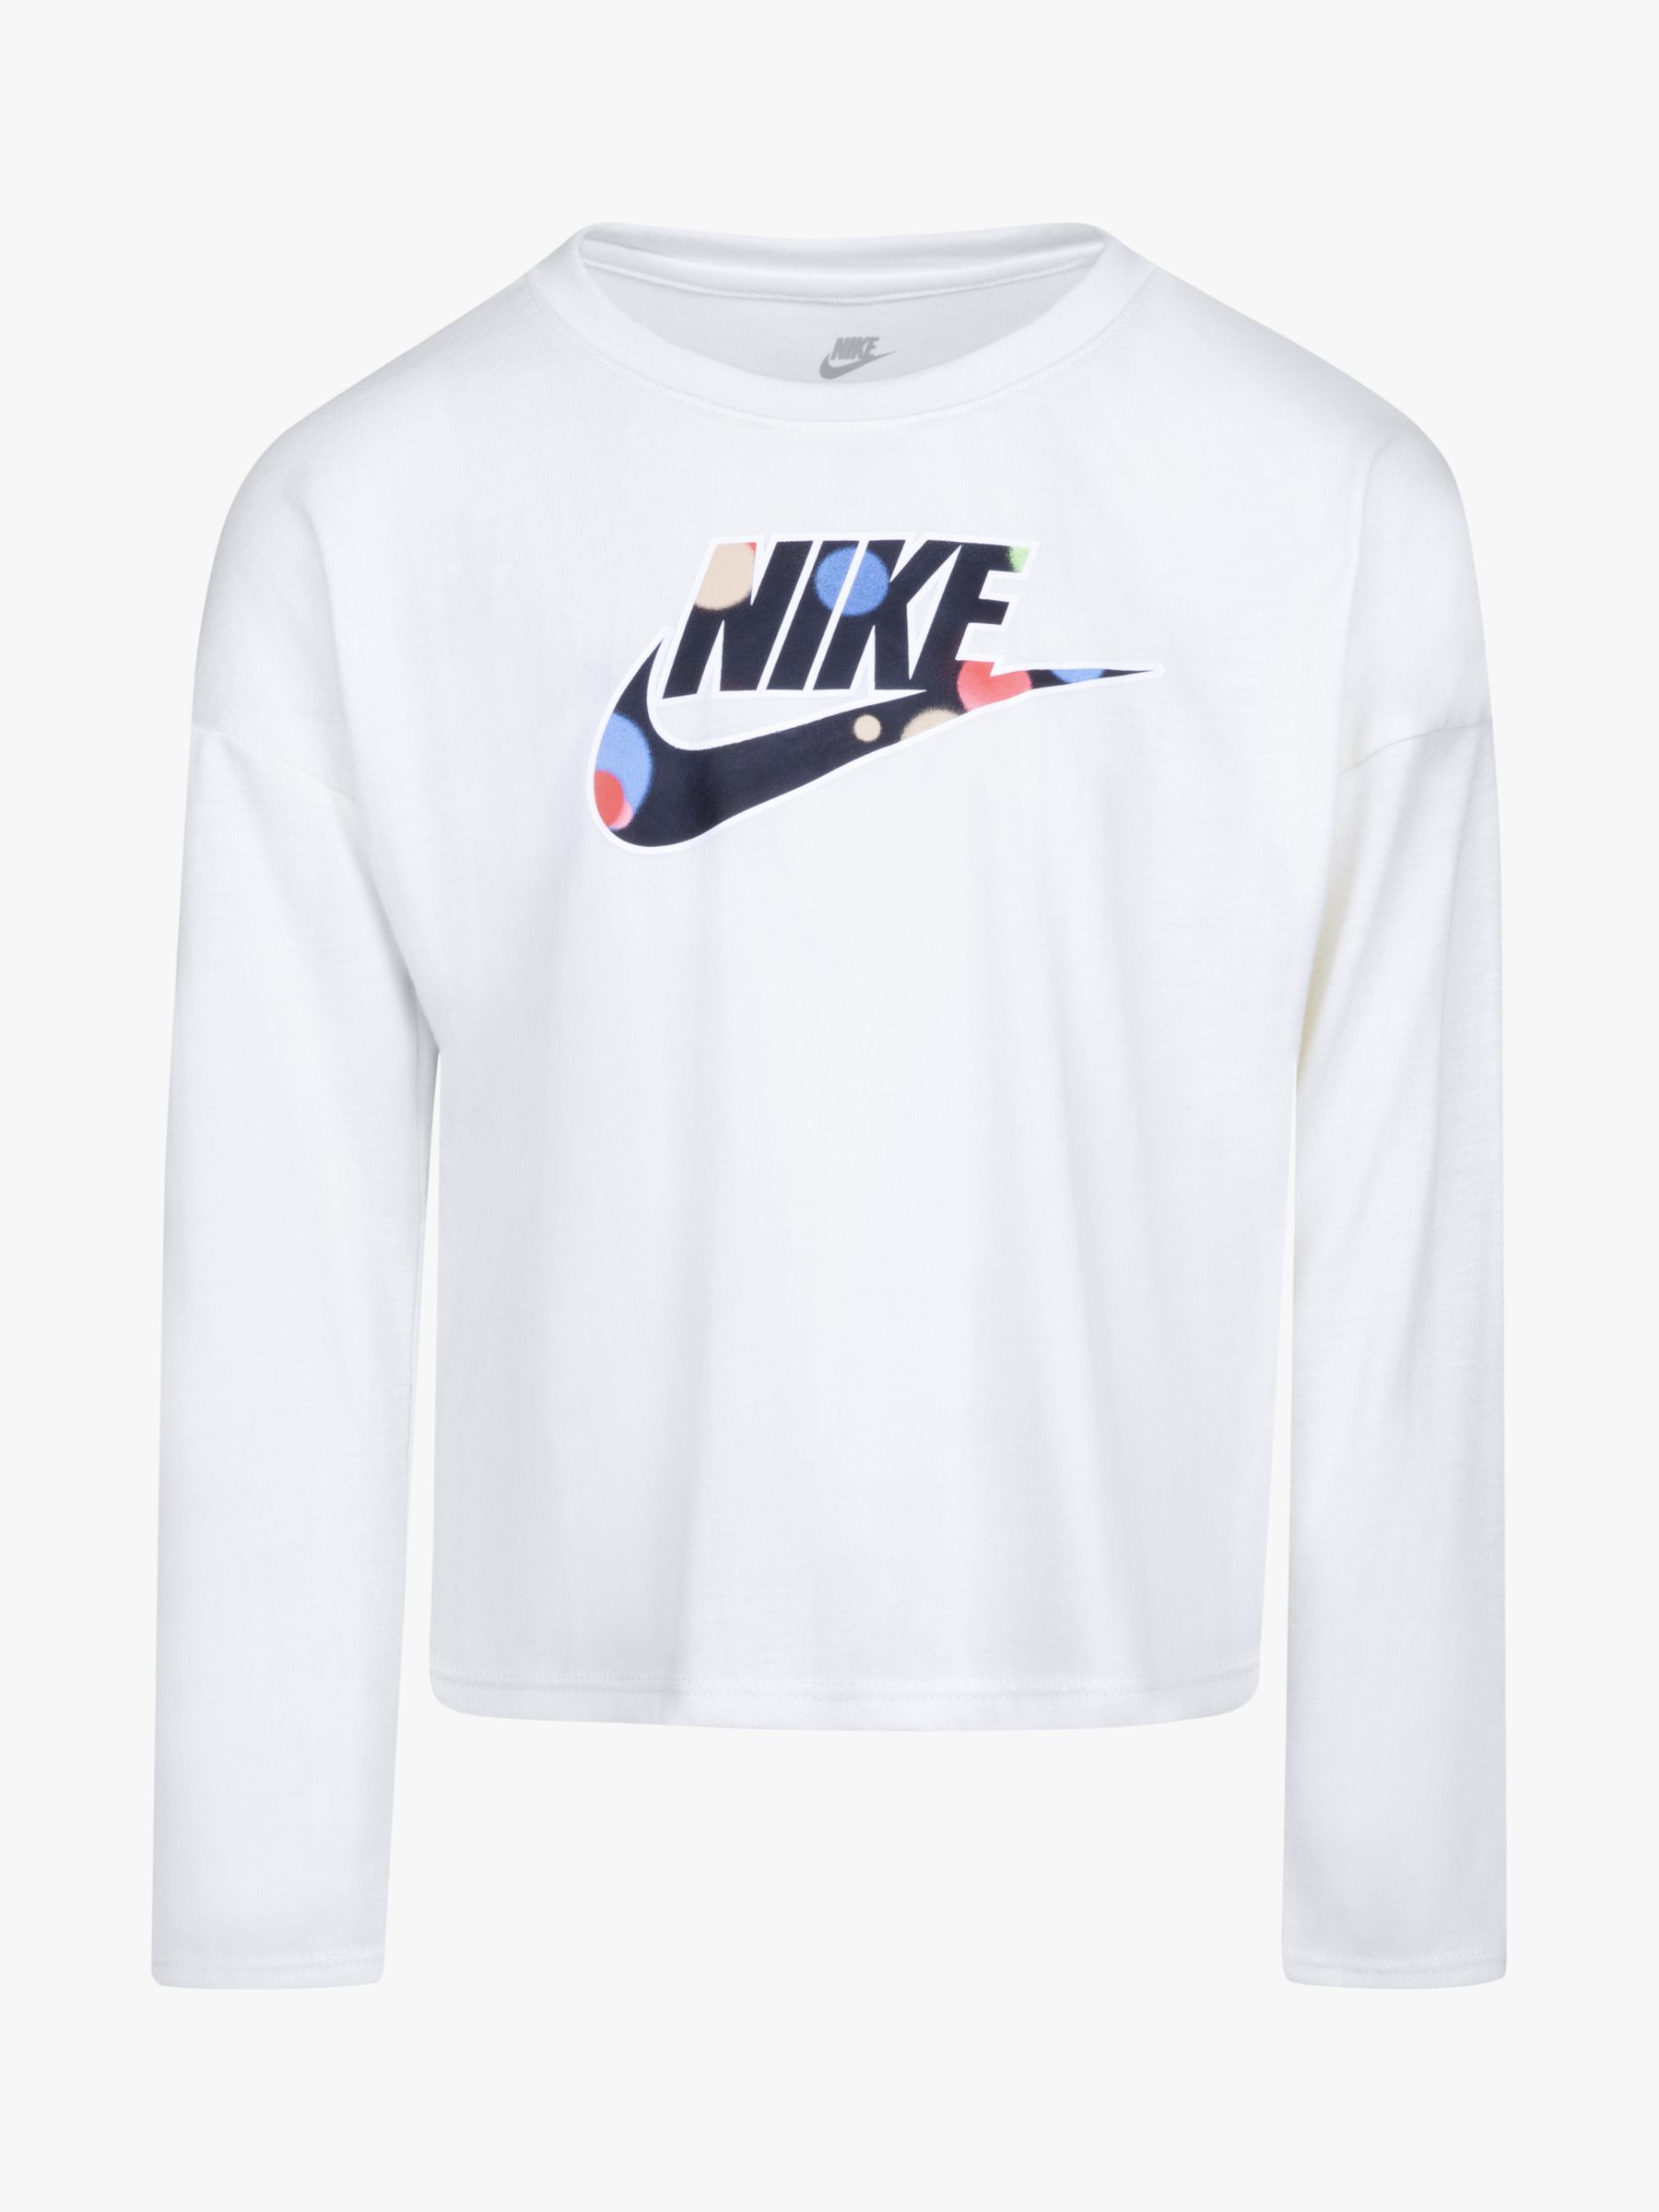 Nike Kids' Logo Long Sleeve Top